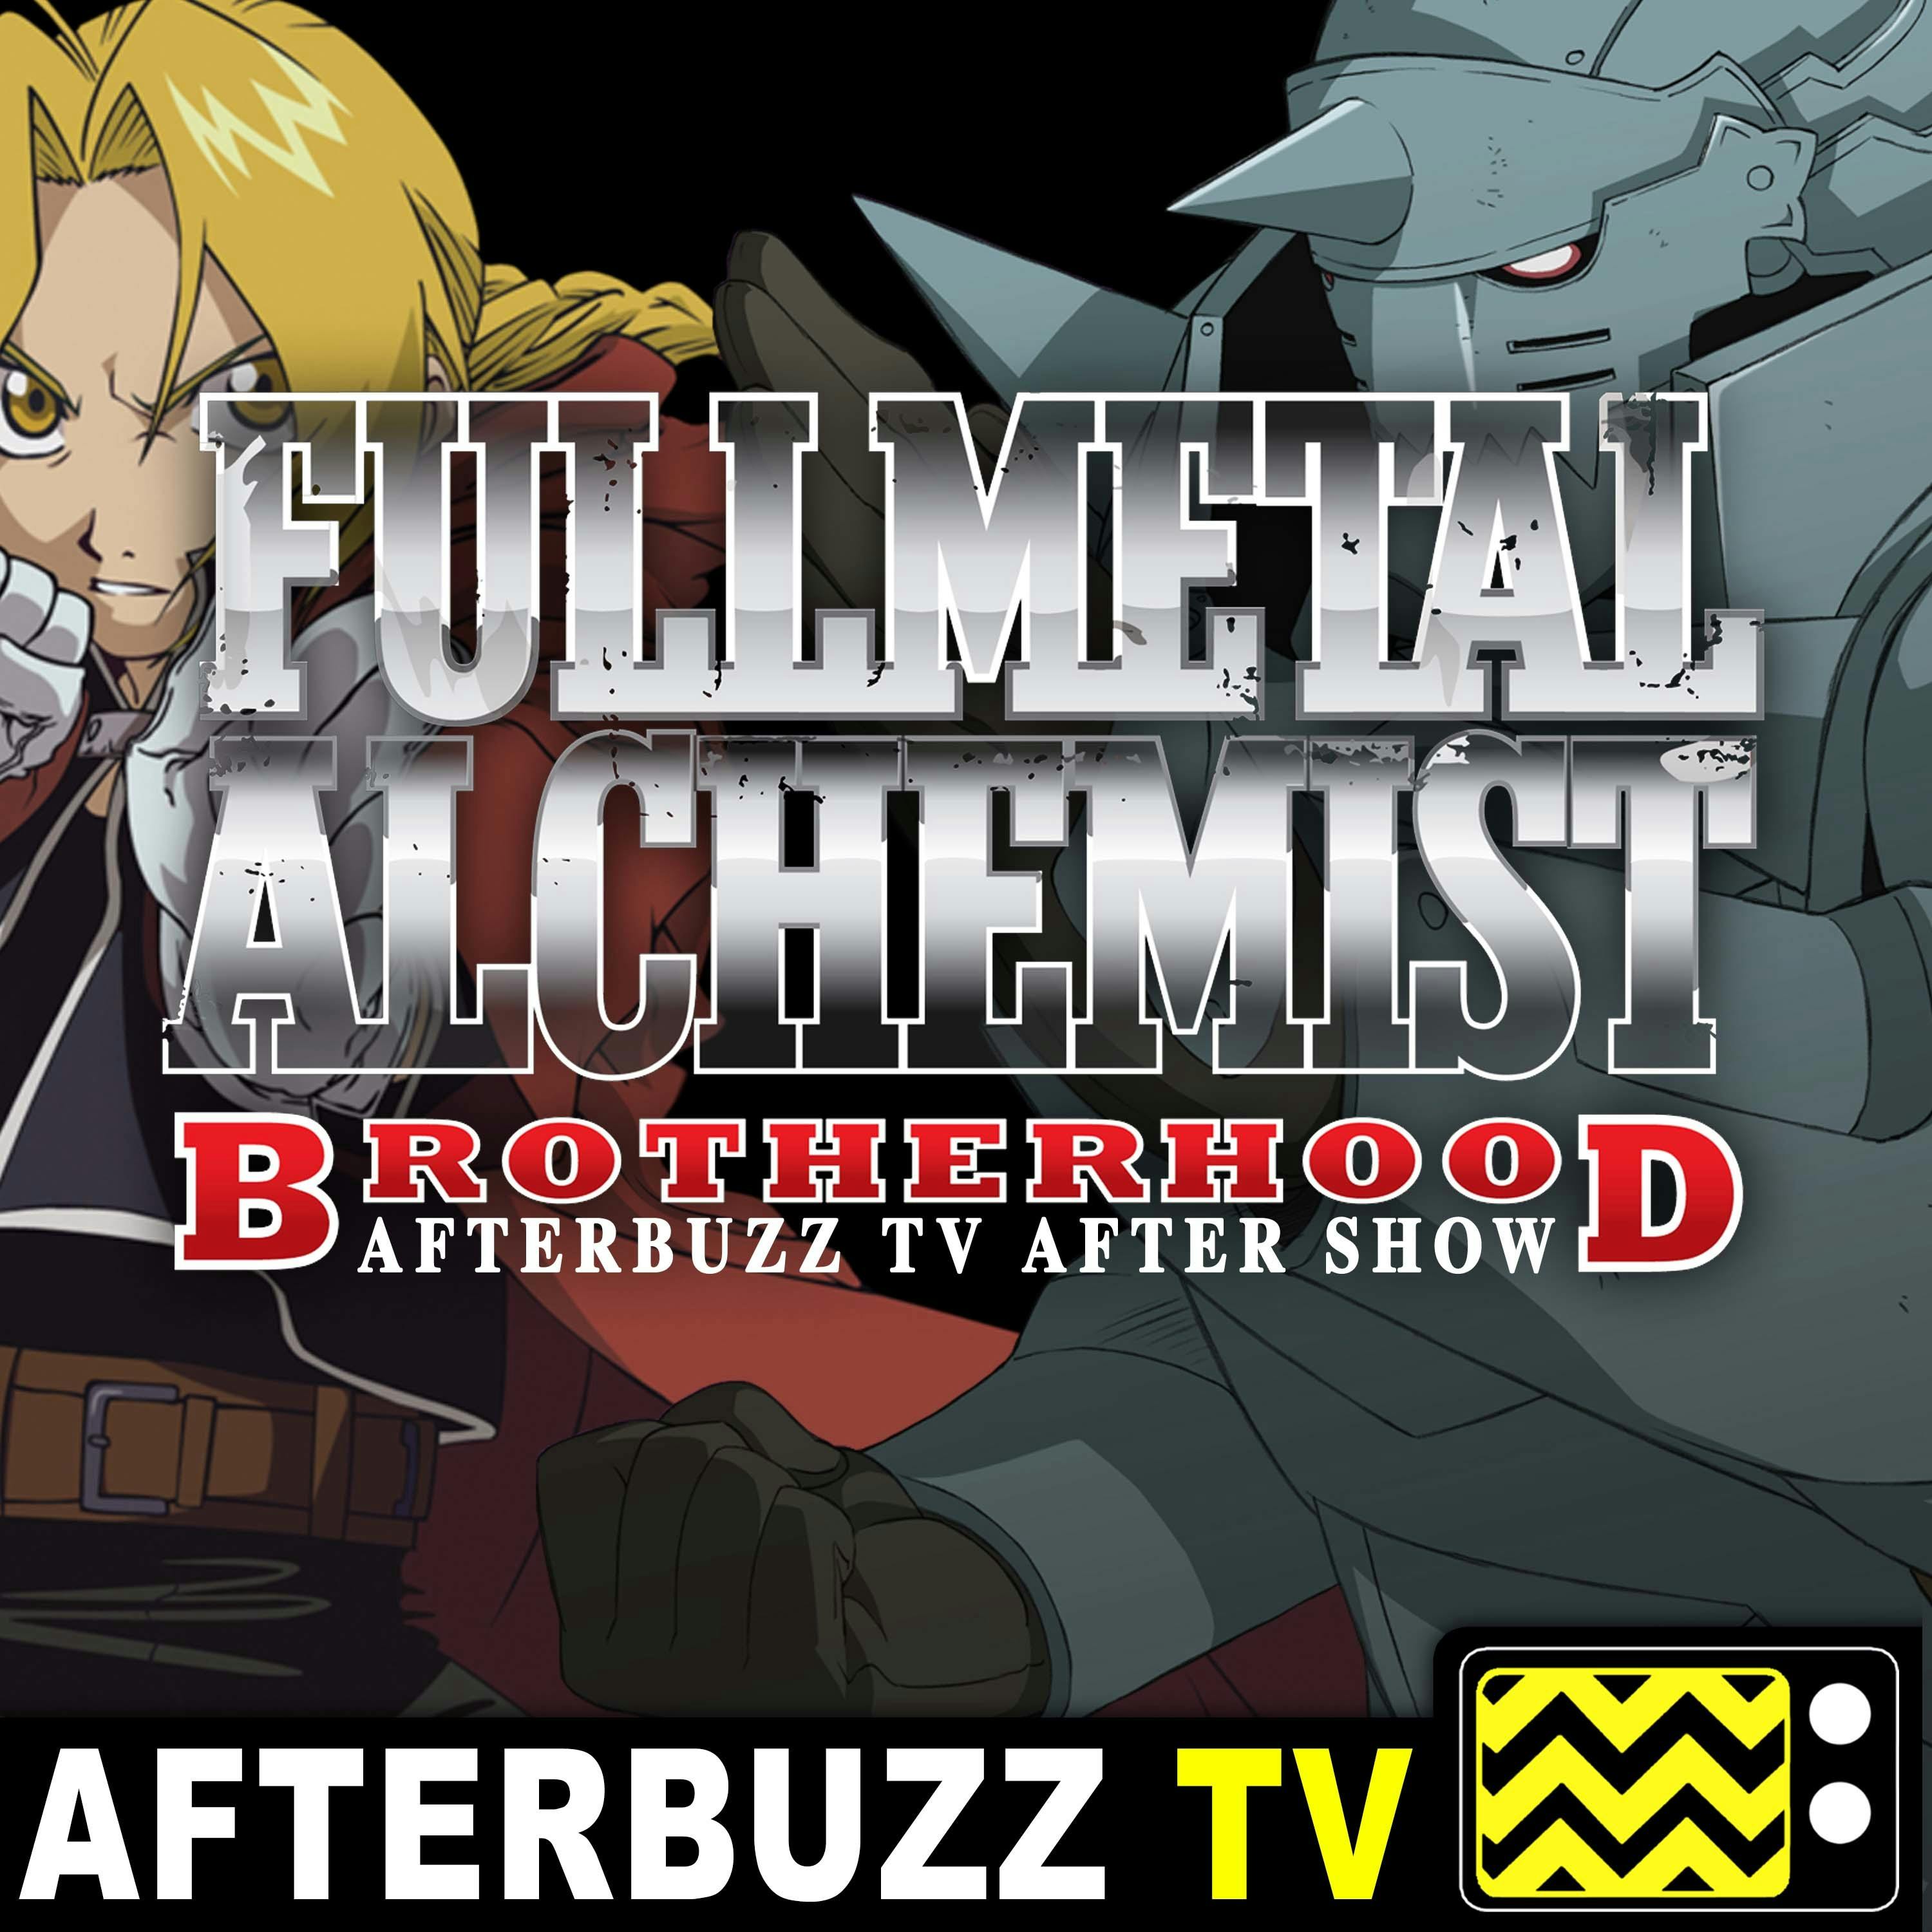 Fullmetal Alchemist: Brotherhood S:2 | Episodes 1 – 4 | AfterBuzz TV AfterShow